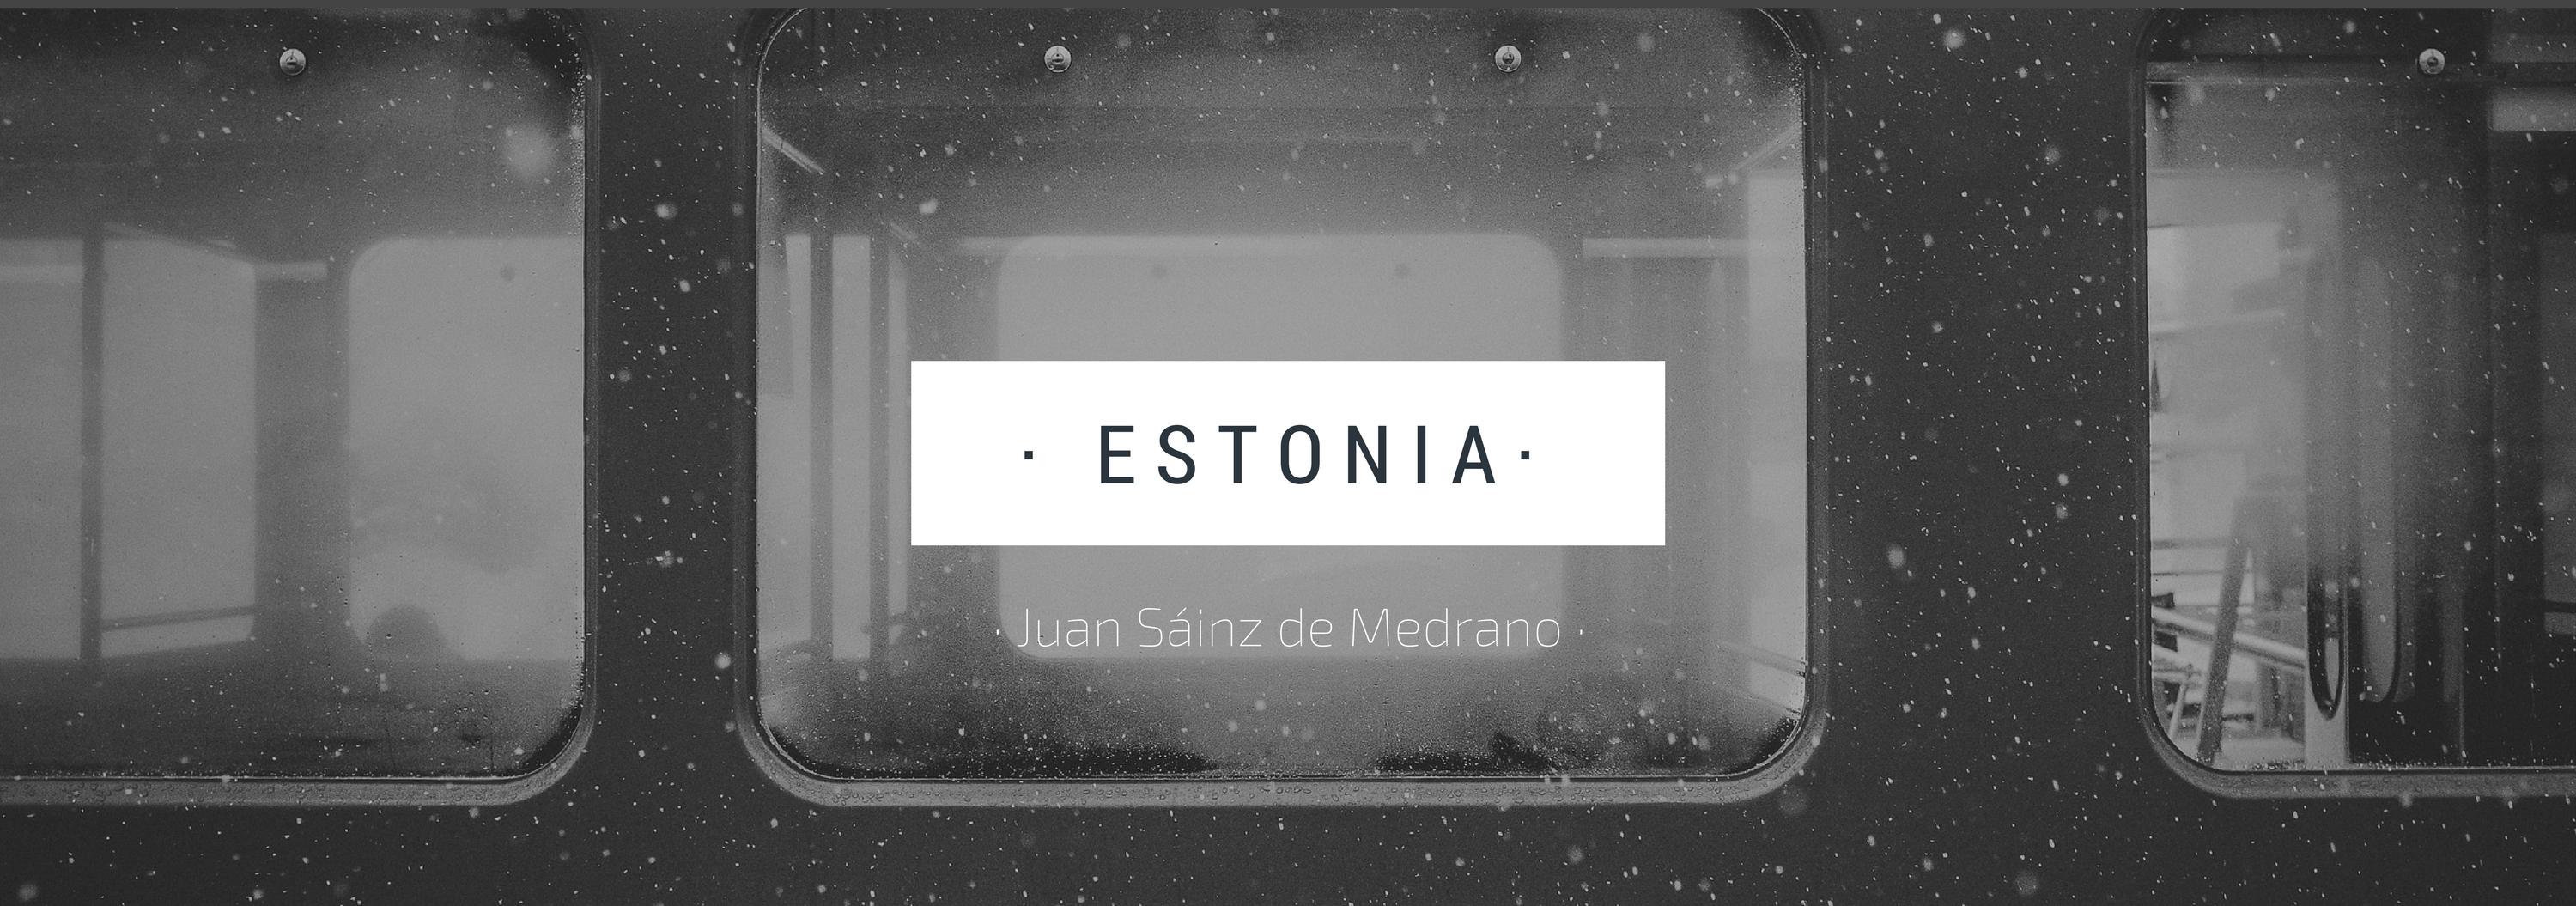 Post_Blog_EntreTuyYO_innovandis_juan_S_medrano_Estonia